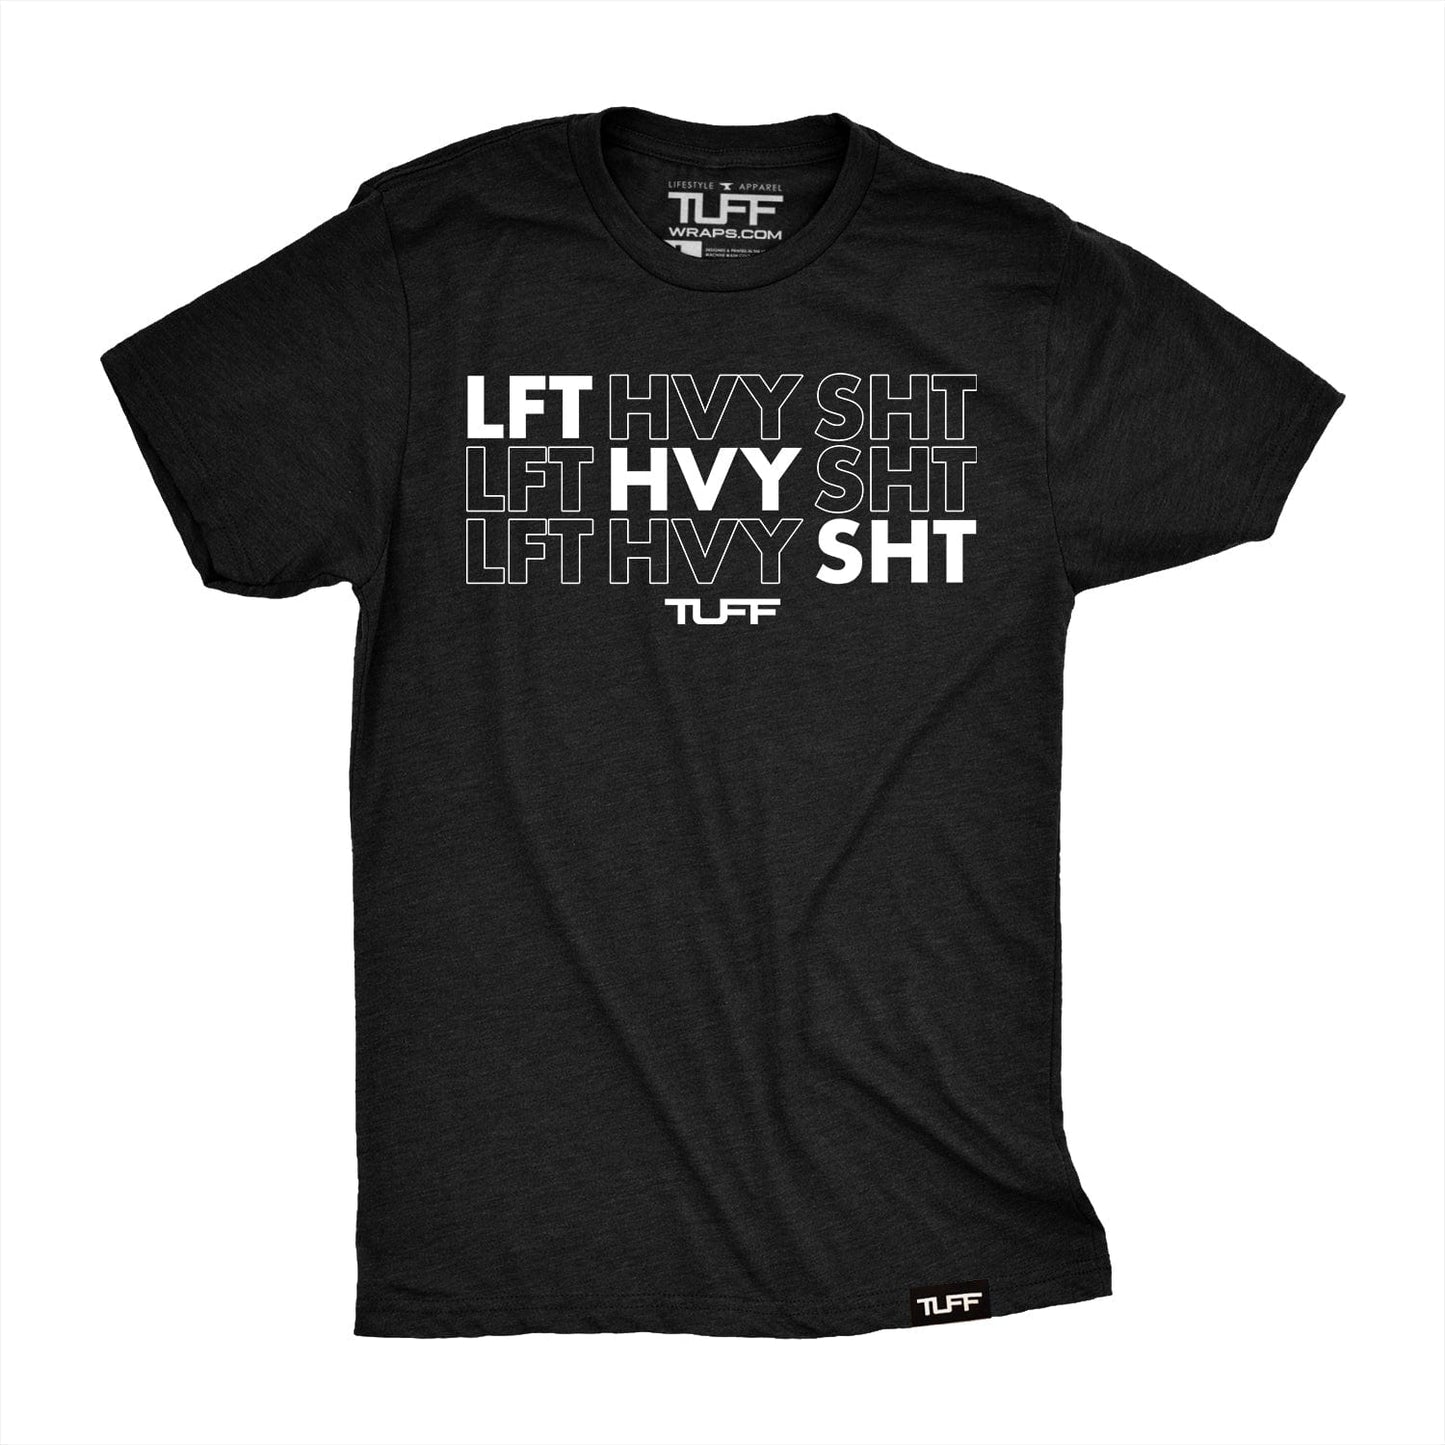 LFT HVY SHT Tee S / Black TuffWraps.com